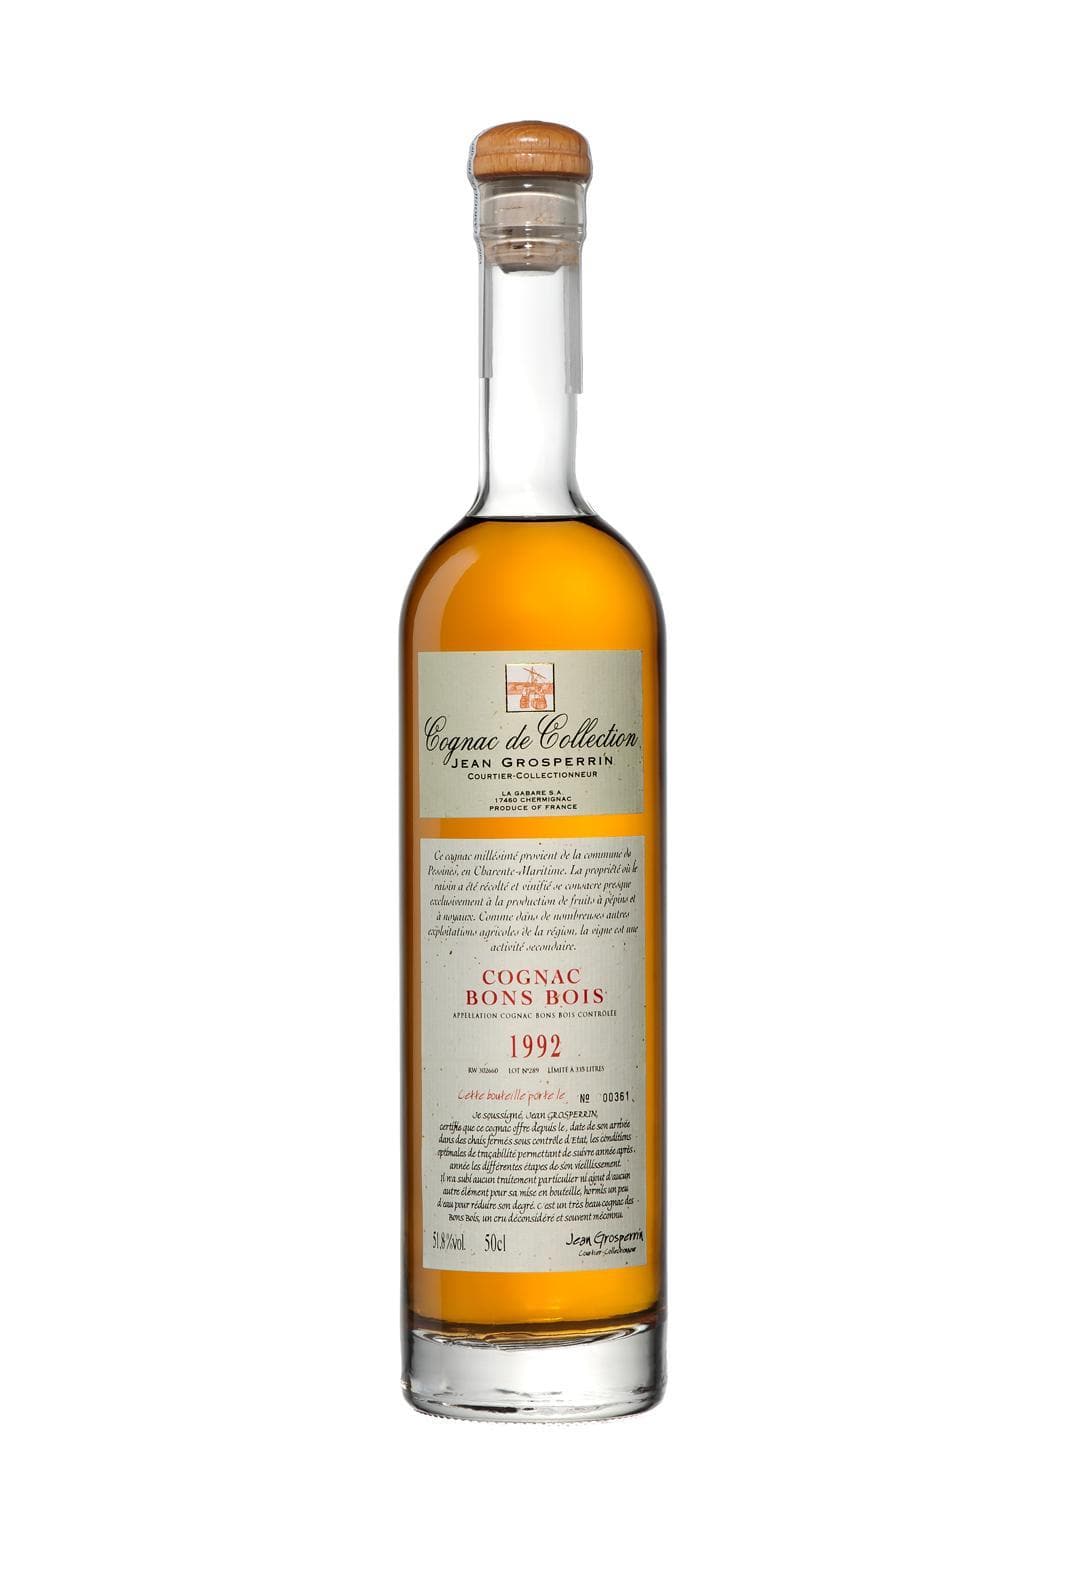 Grosperrin 'Cognac De Collection' 1992 Bons Bois 52% 500ml | Brandy | Shop online at Spirits of France